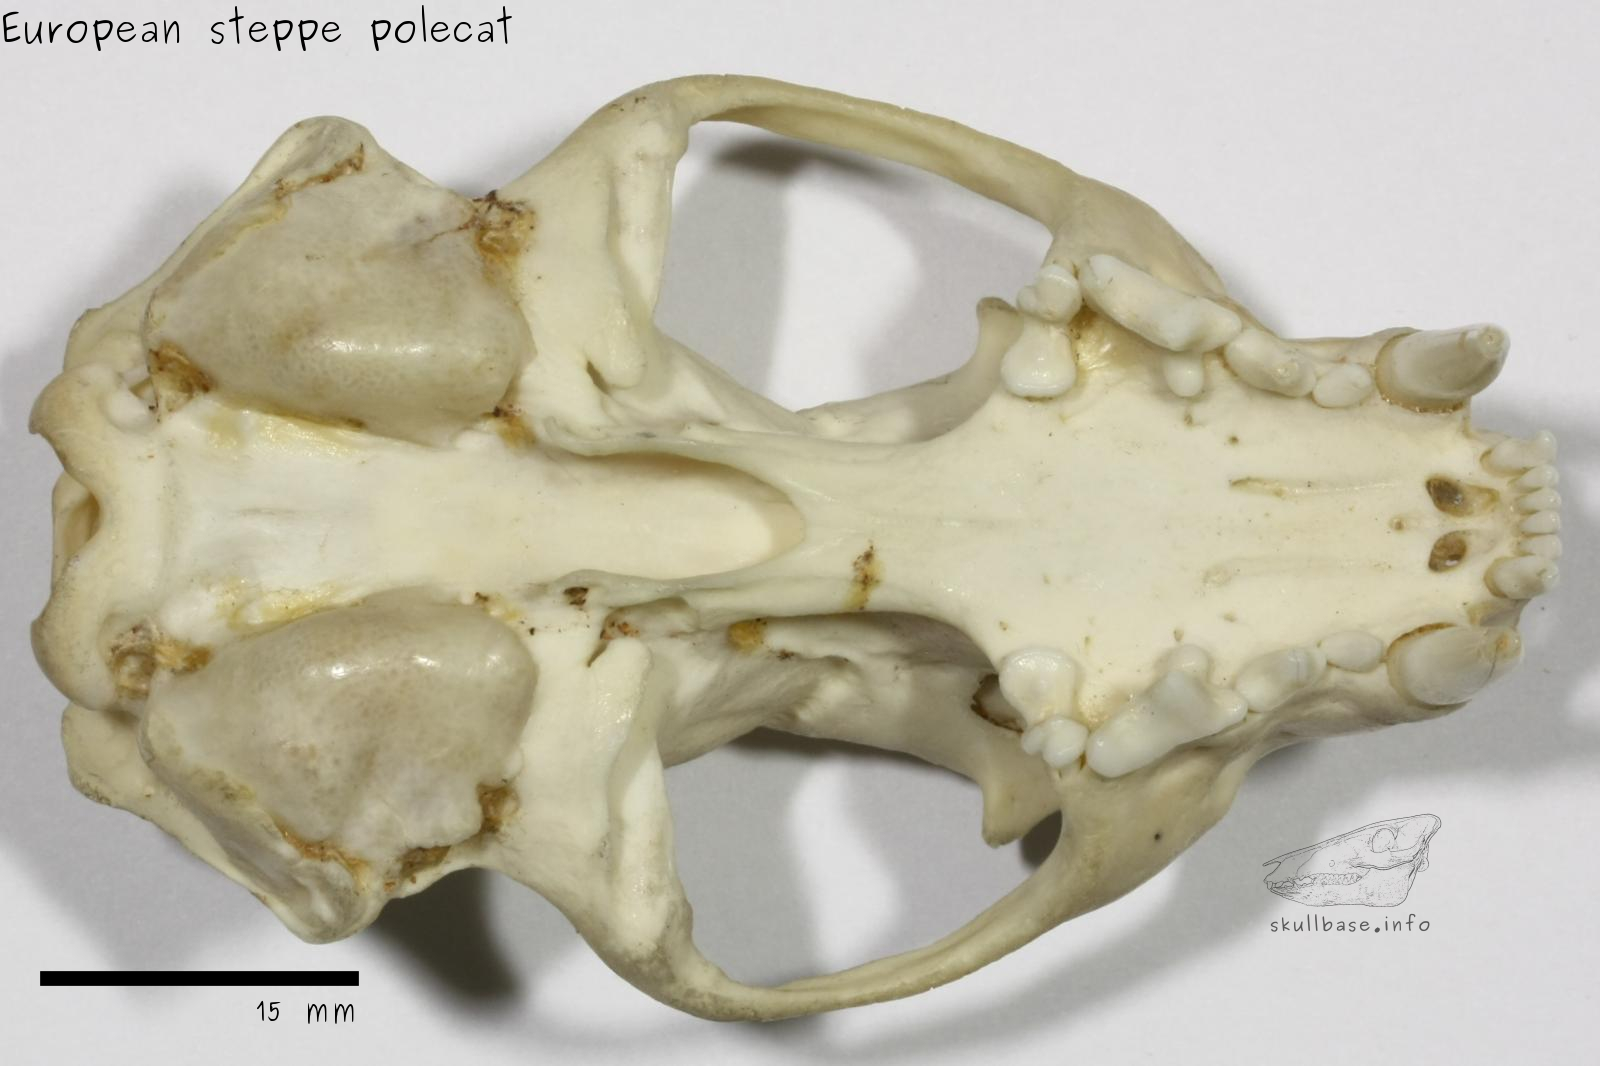 European steppe polecat (Mustela eversmanii hungarica) skull ventral view